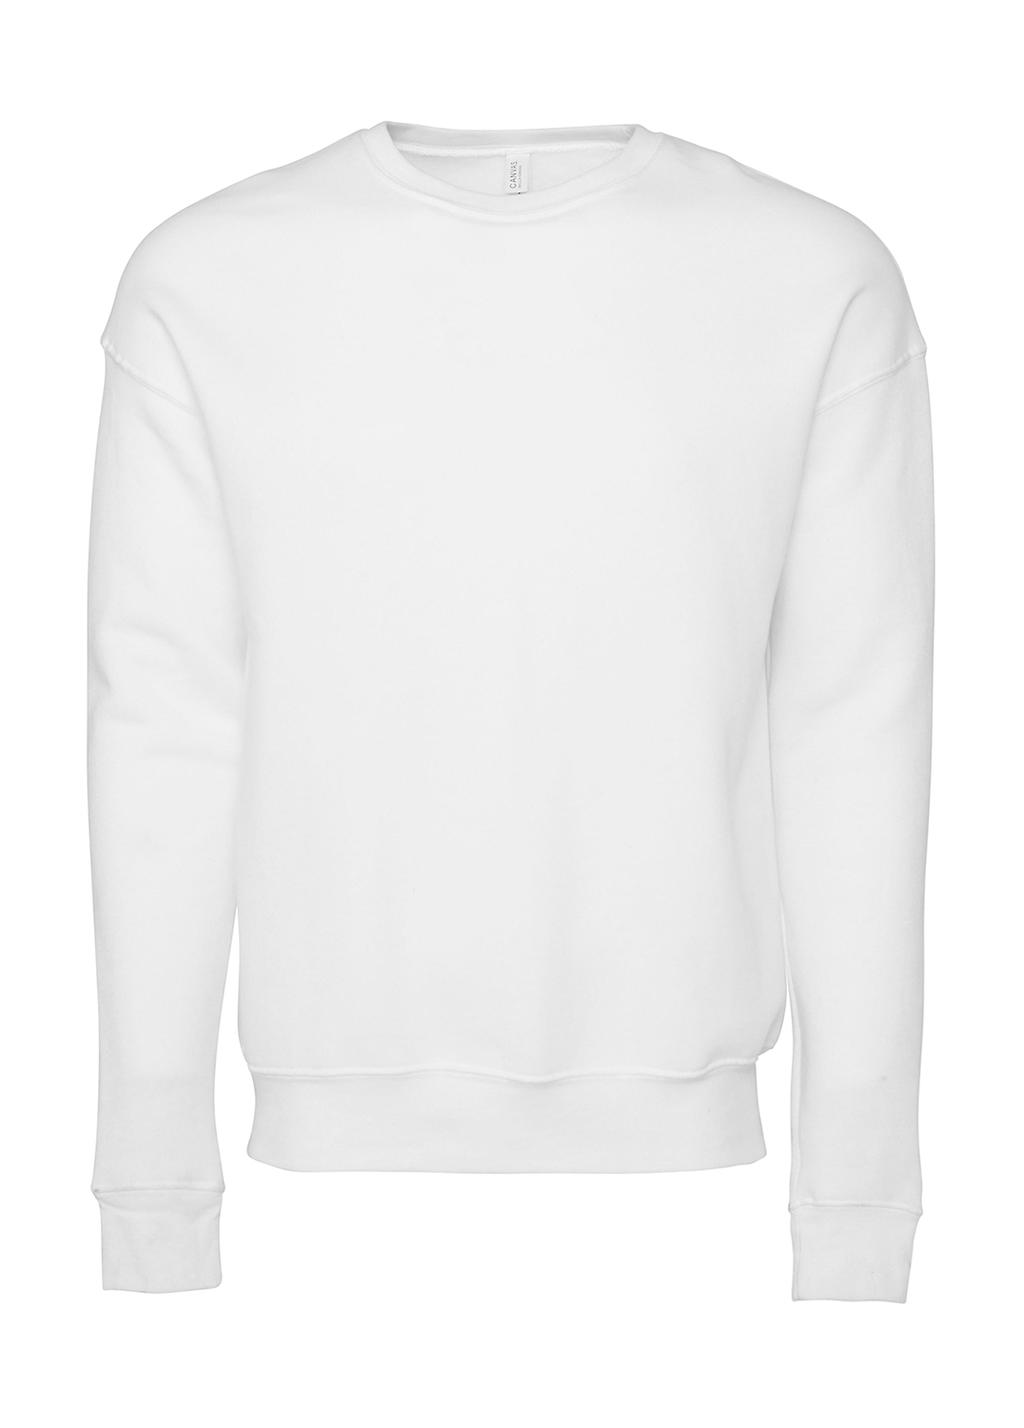  Unisex Drop Shoulder Fleece in Farbe DTG White